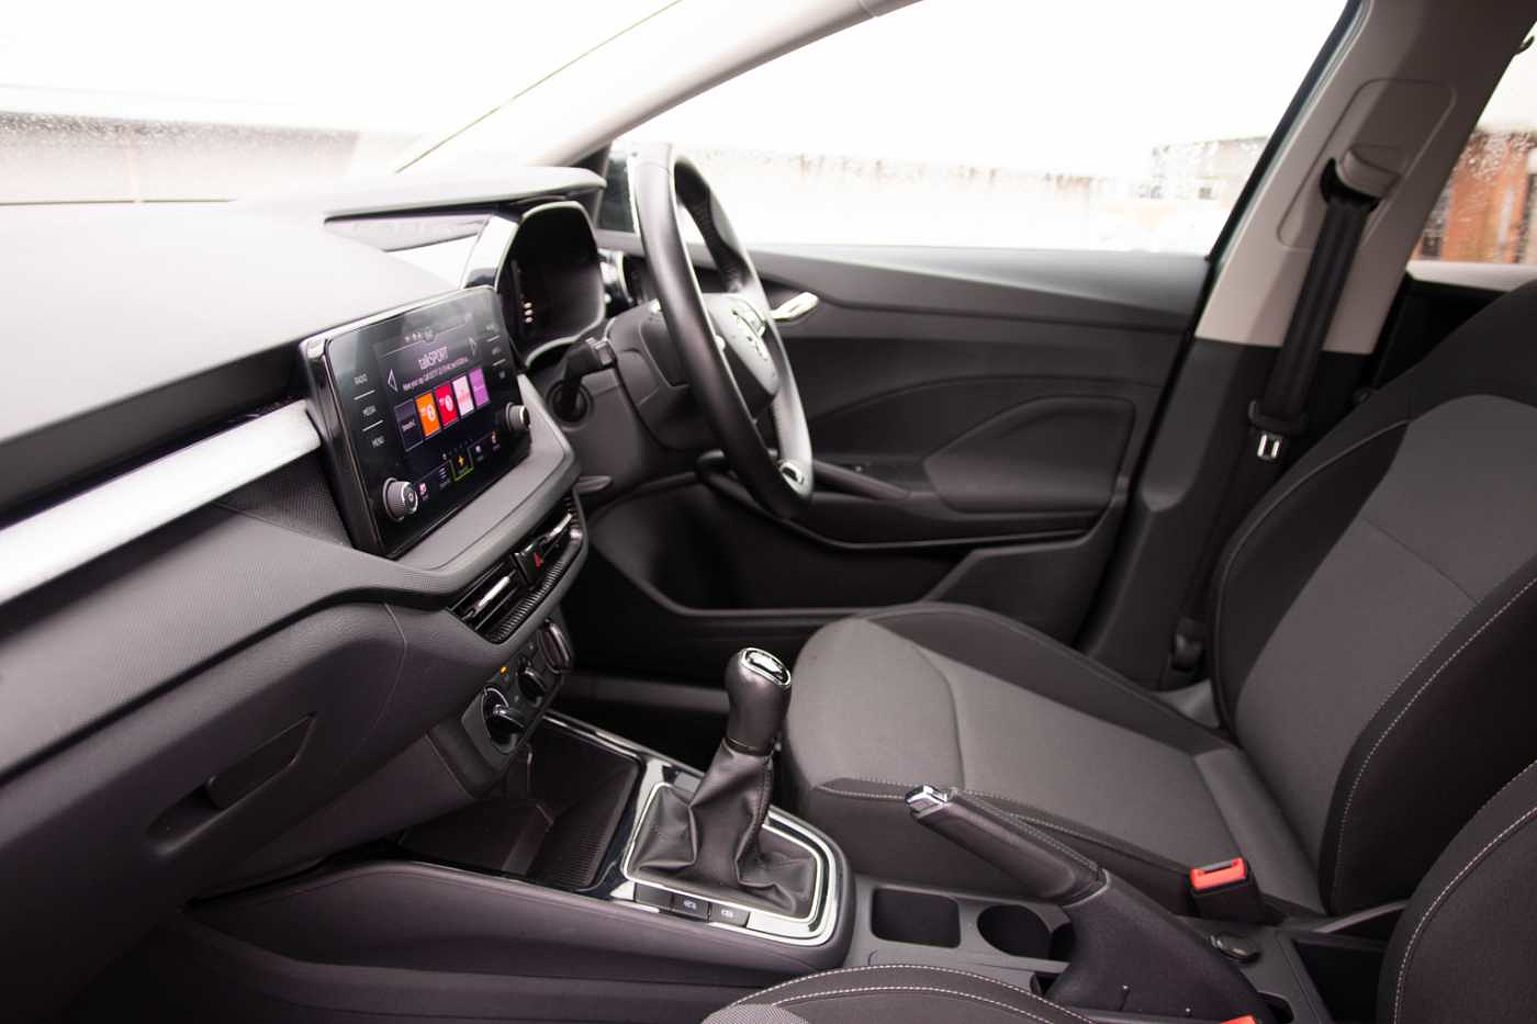 SKODA Fabia 1.0 MPI (80ps) Colour Edition 5-Dr Hatchback